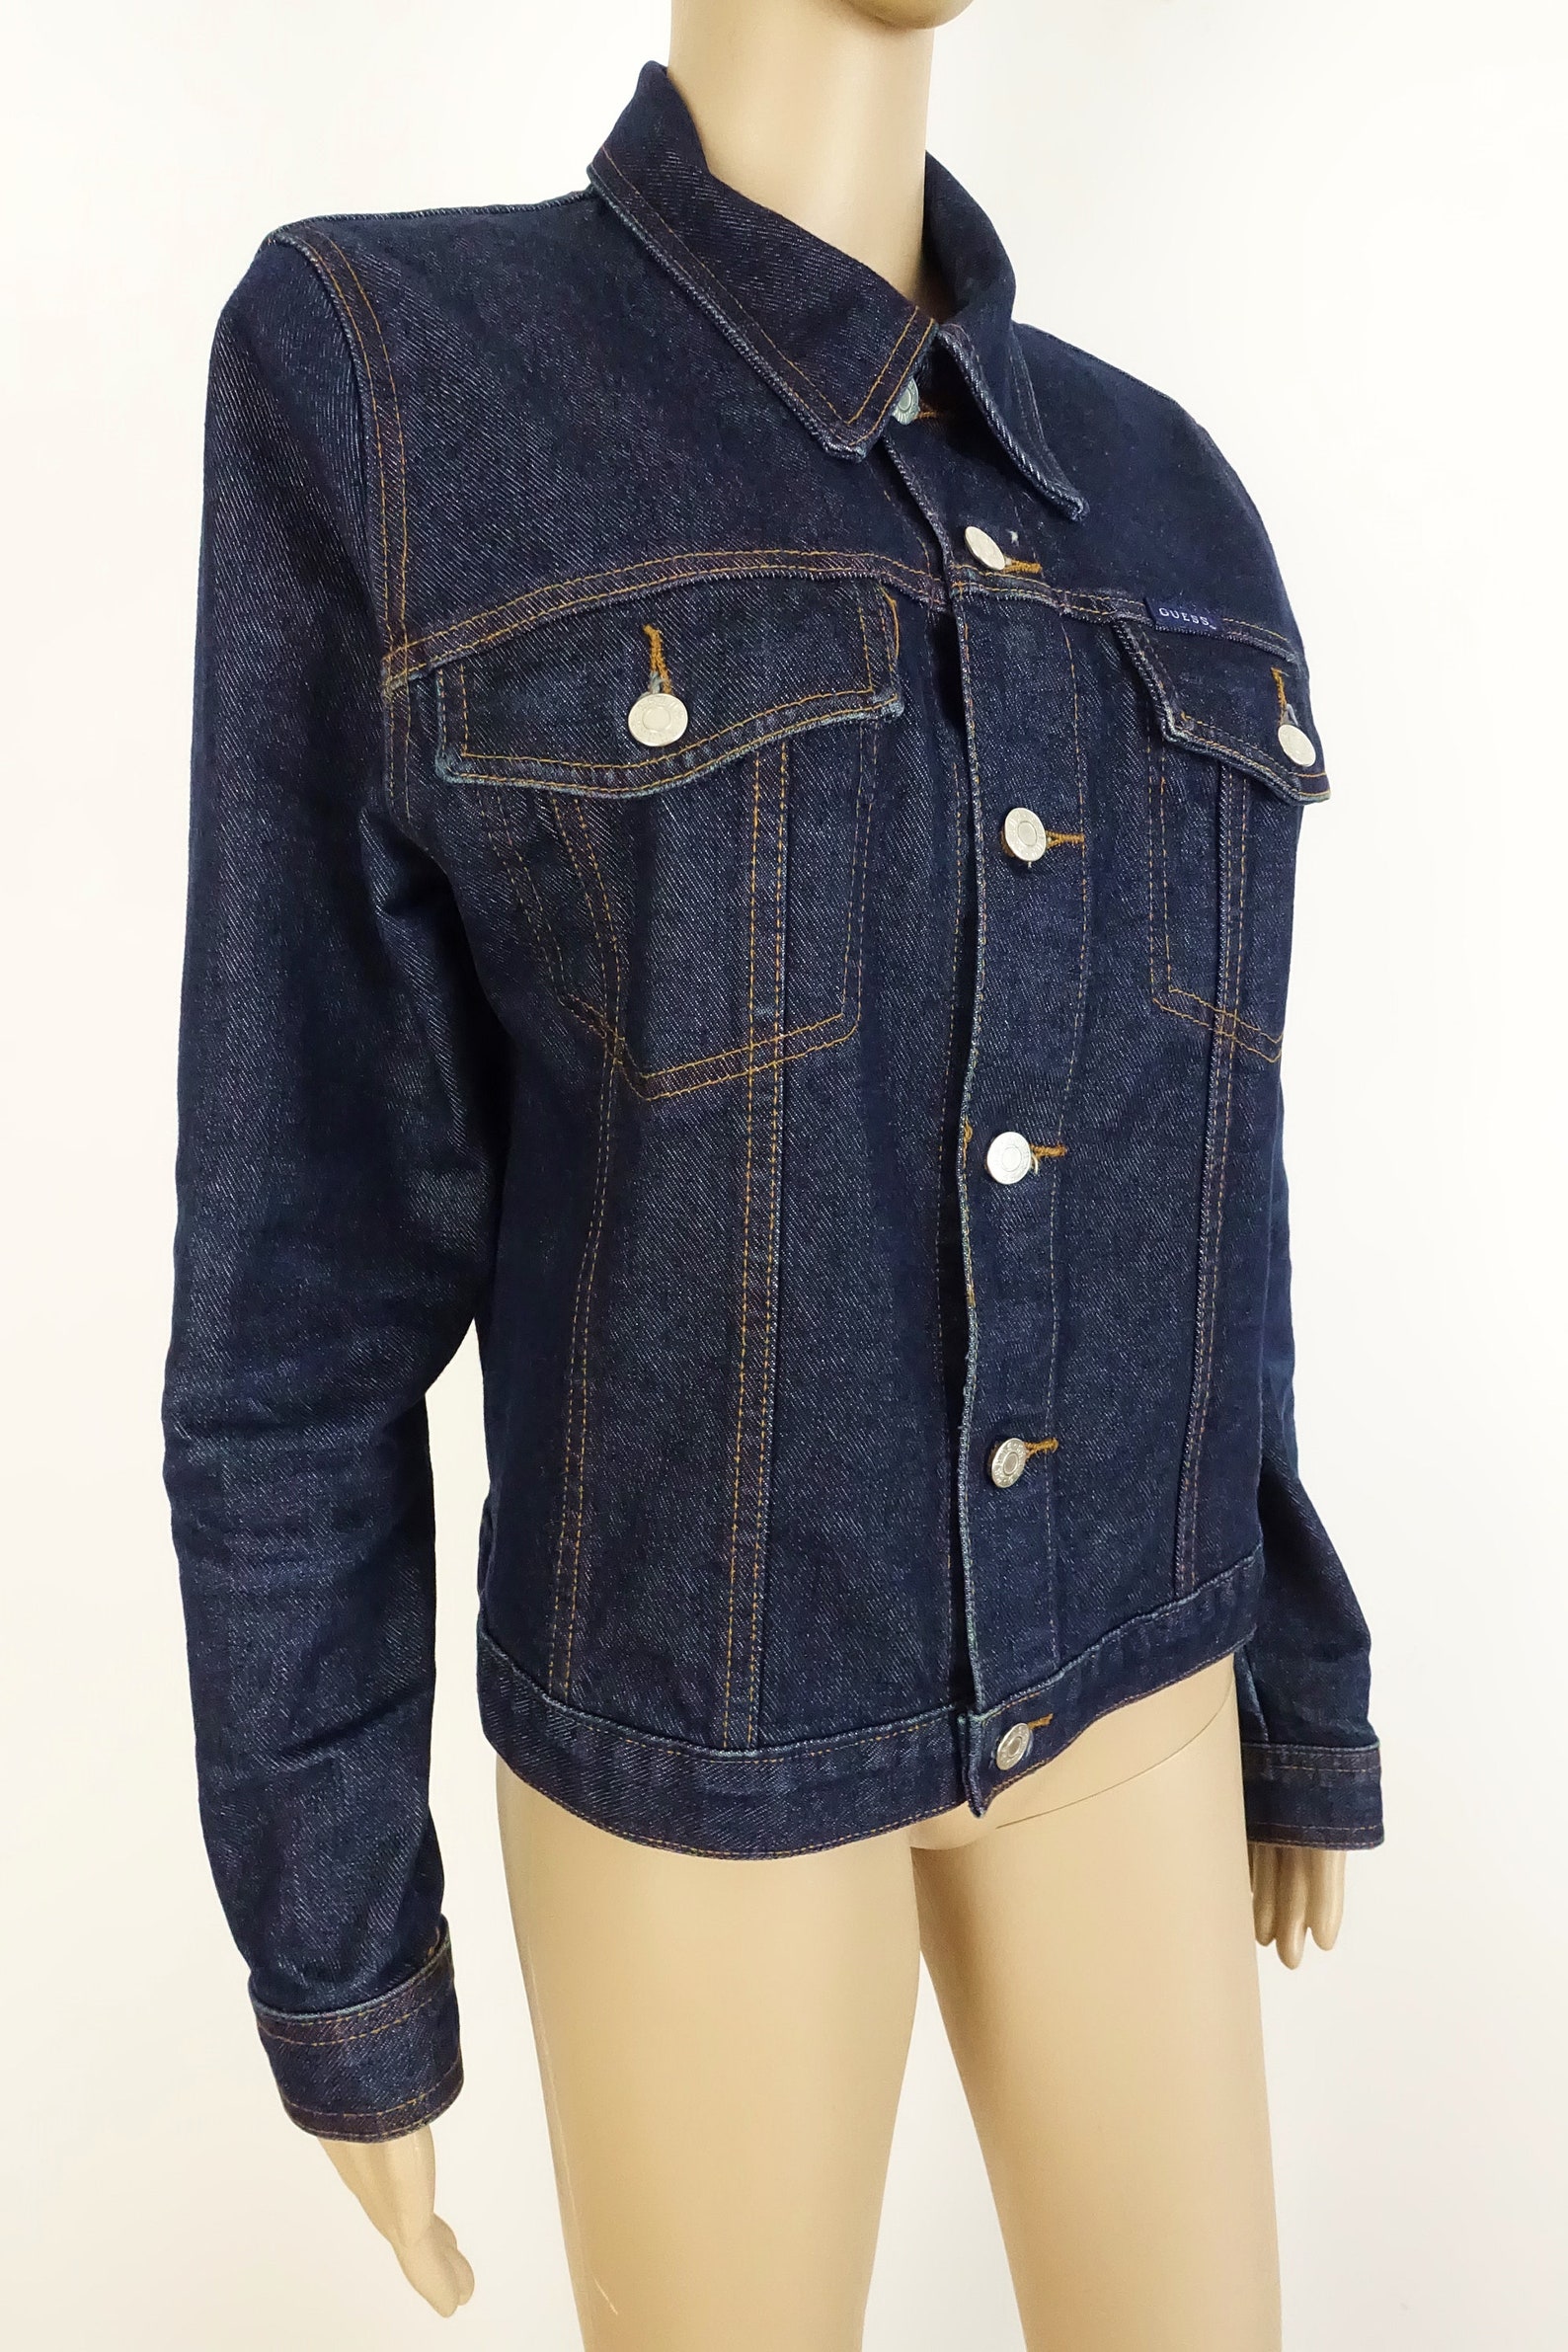 Vintage GUESS Jean Jacket 90s Dark Wash Denim Jacket Medium | Etsy